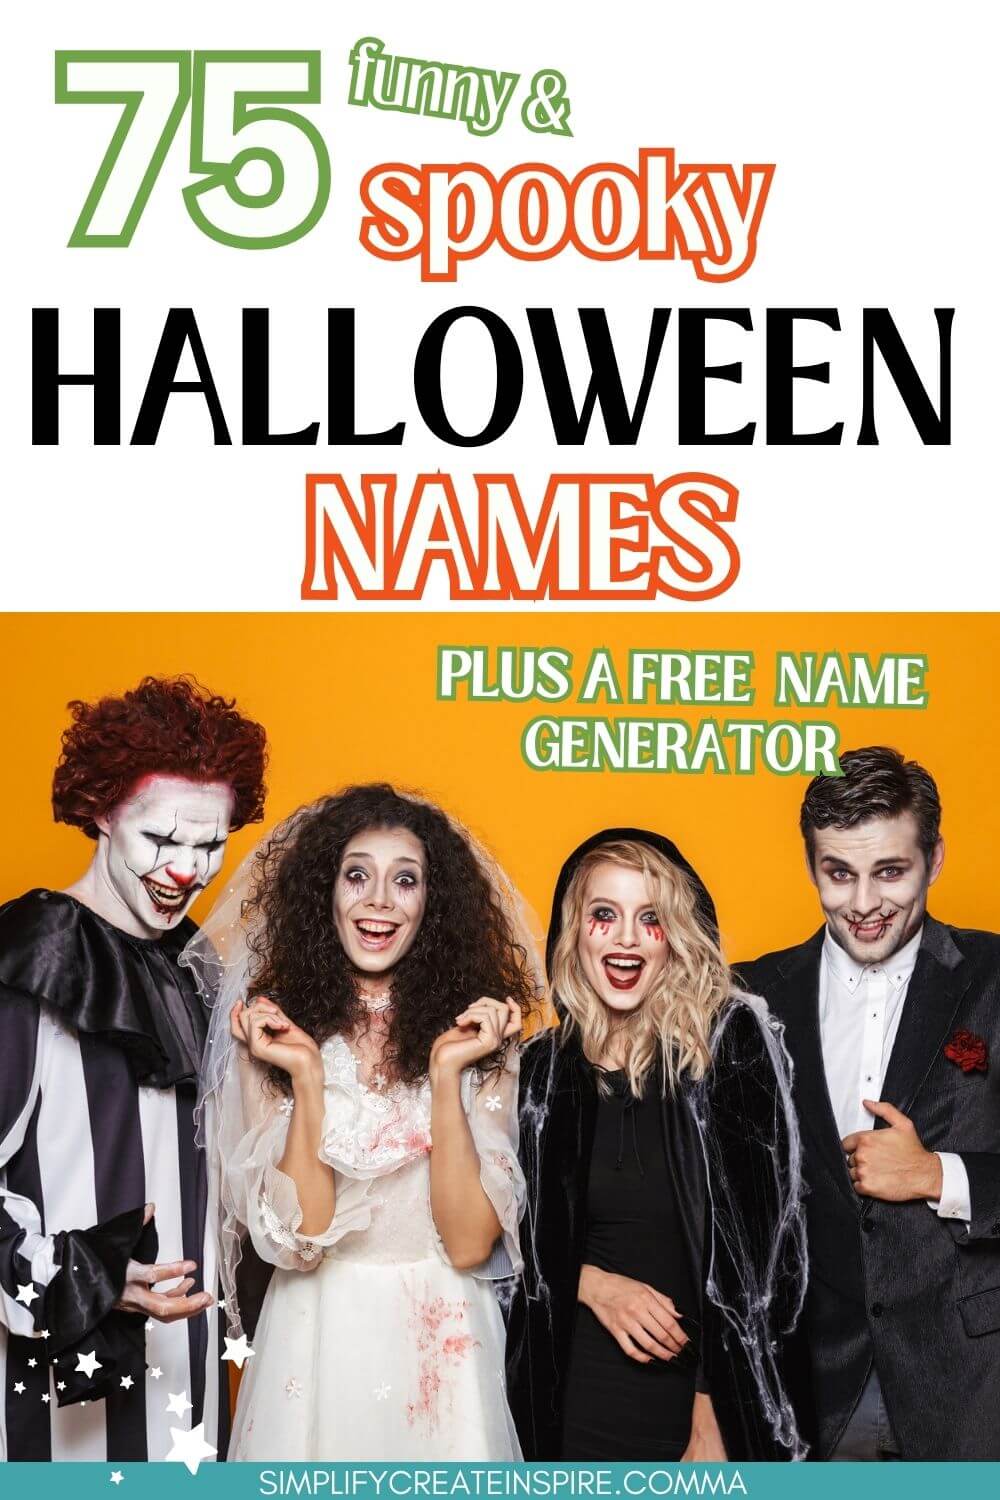 75 spooky halloween names and free halloween name generator